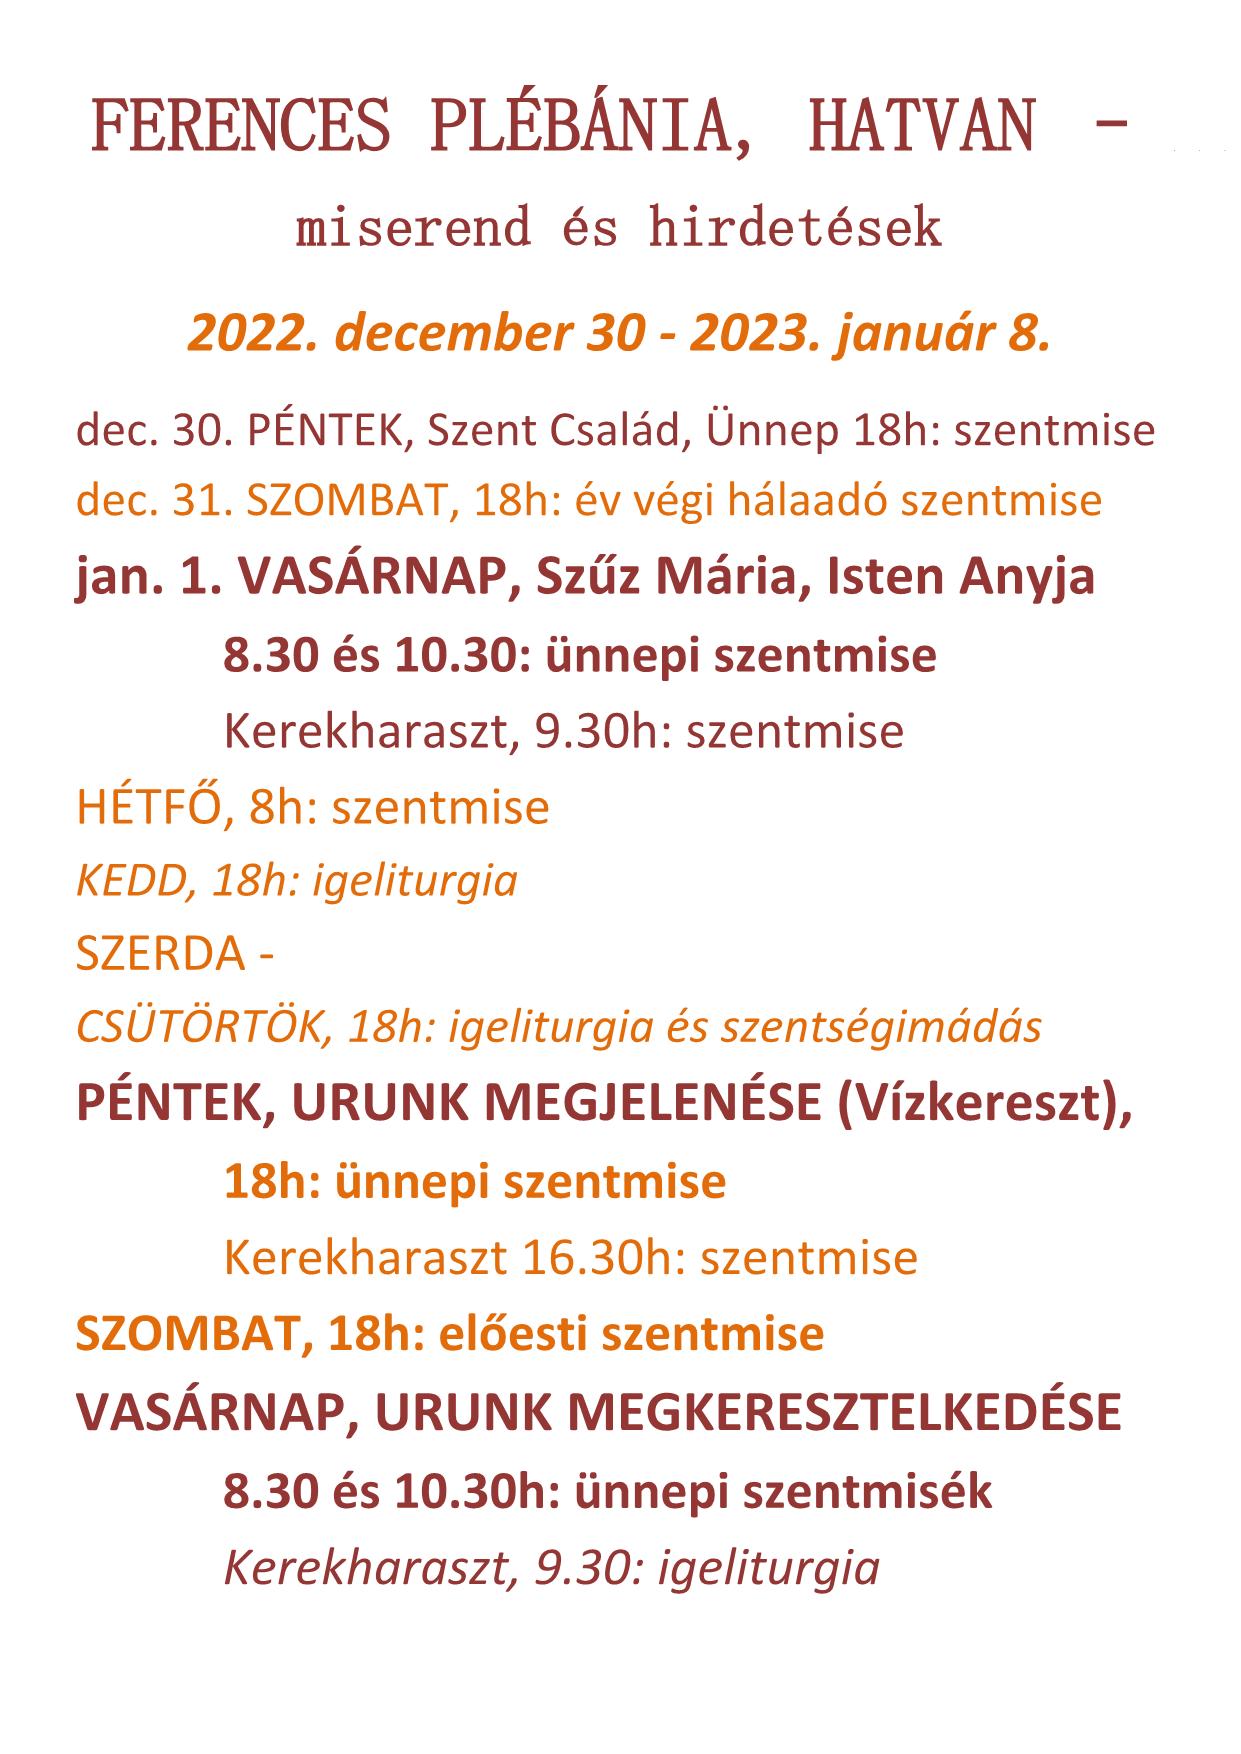 HATVAN FERENCES 2022.12.30 1